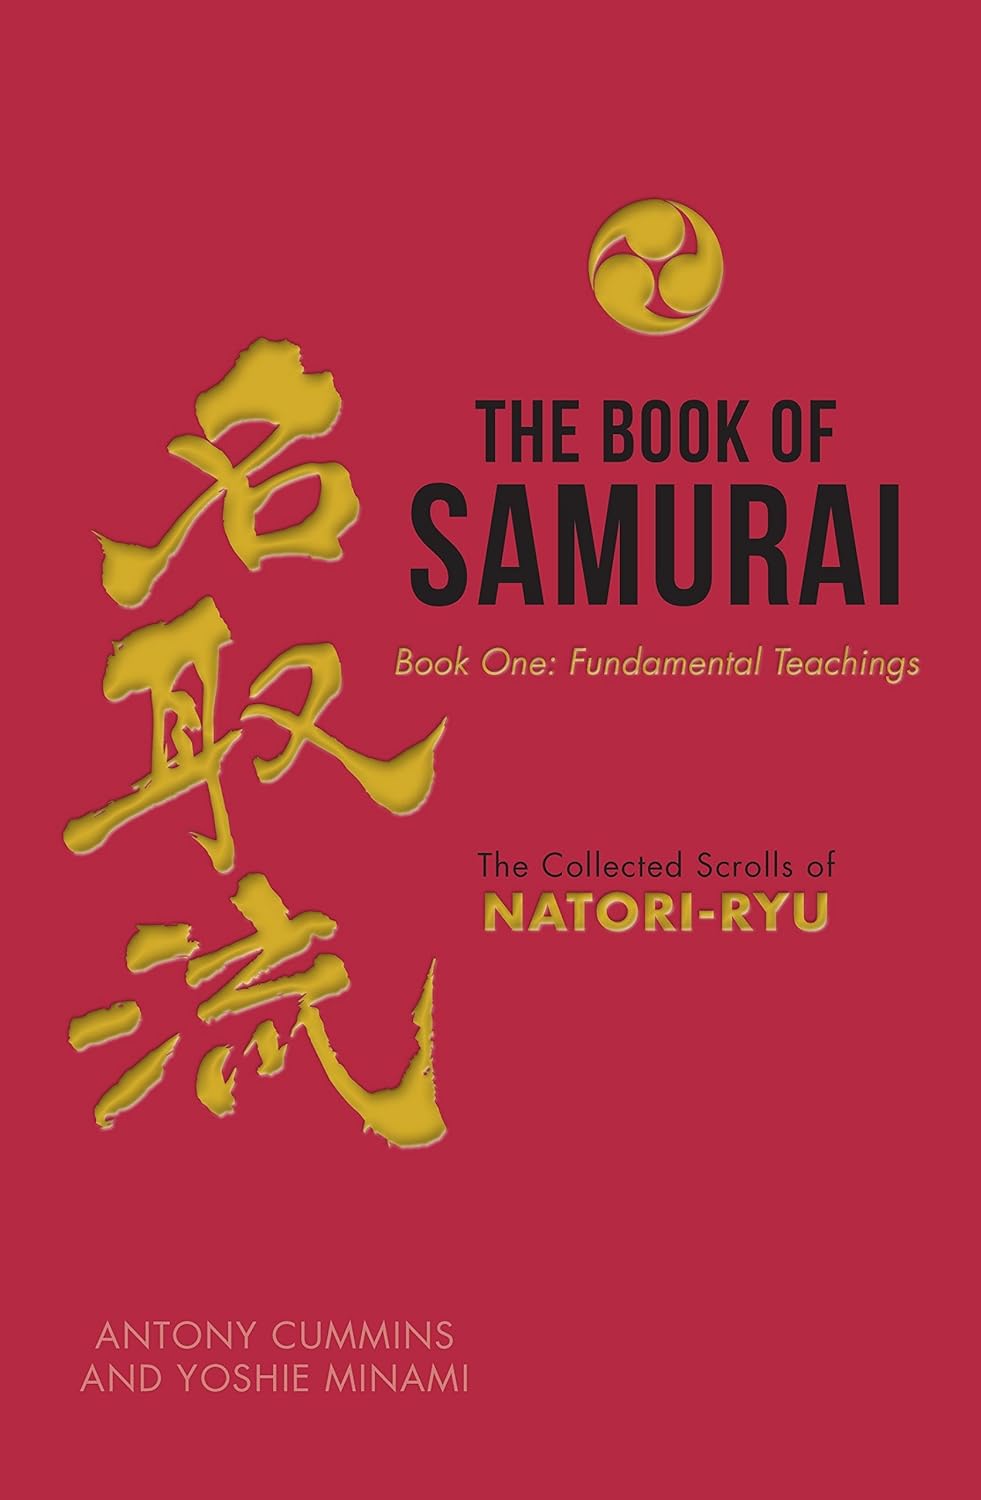 The Book of Samurai: The Fundamental Teachings Book by Antony Cummins & Yoshie Manami (Hardcover)